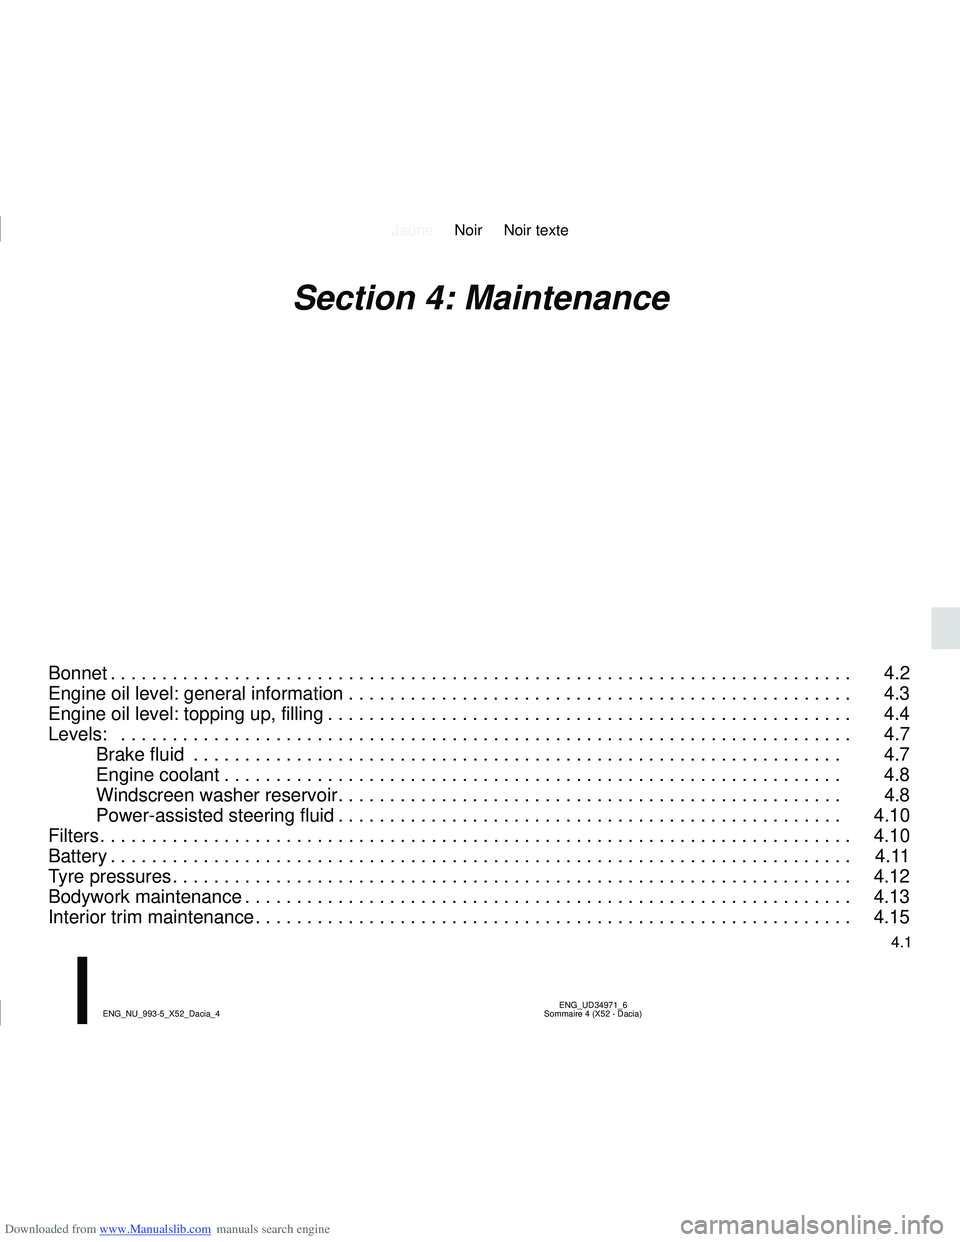 DACIA SANDERO 2022  Owners Manual Downloaded from www.Manualslib.com manuals search engine JauneNoir Noir texte
4.1
ENG_UD34971_6
Sommaire 4 (X52 - Dacia)
ENG_NU_993-5_X52_Dacia_4
Section 4: Maintenance
Bonnet . . . . . . . . . . . . 